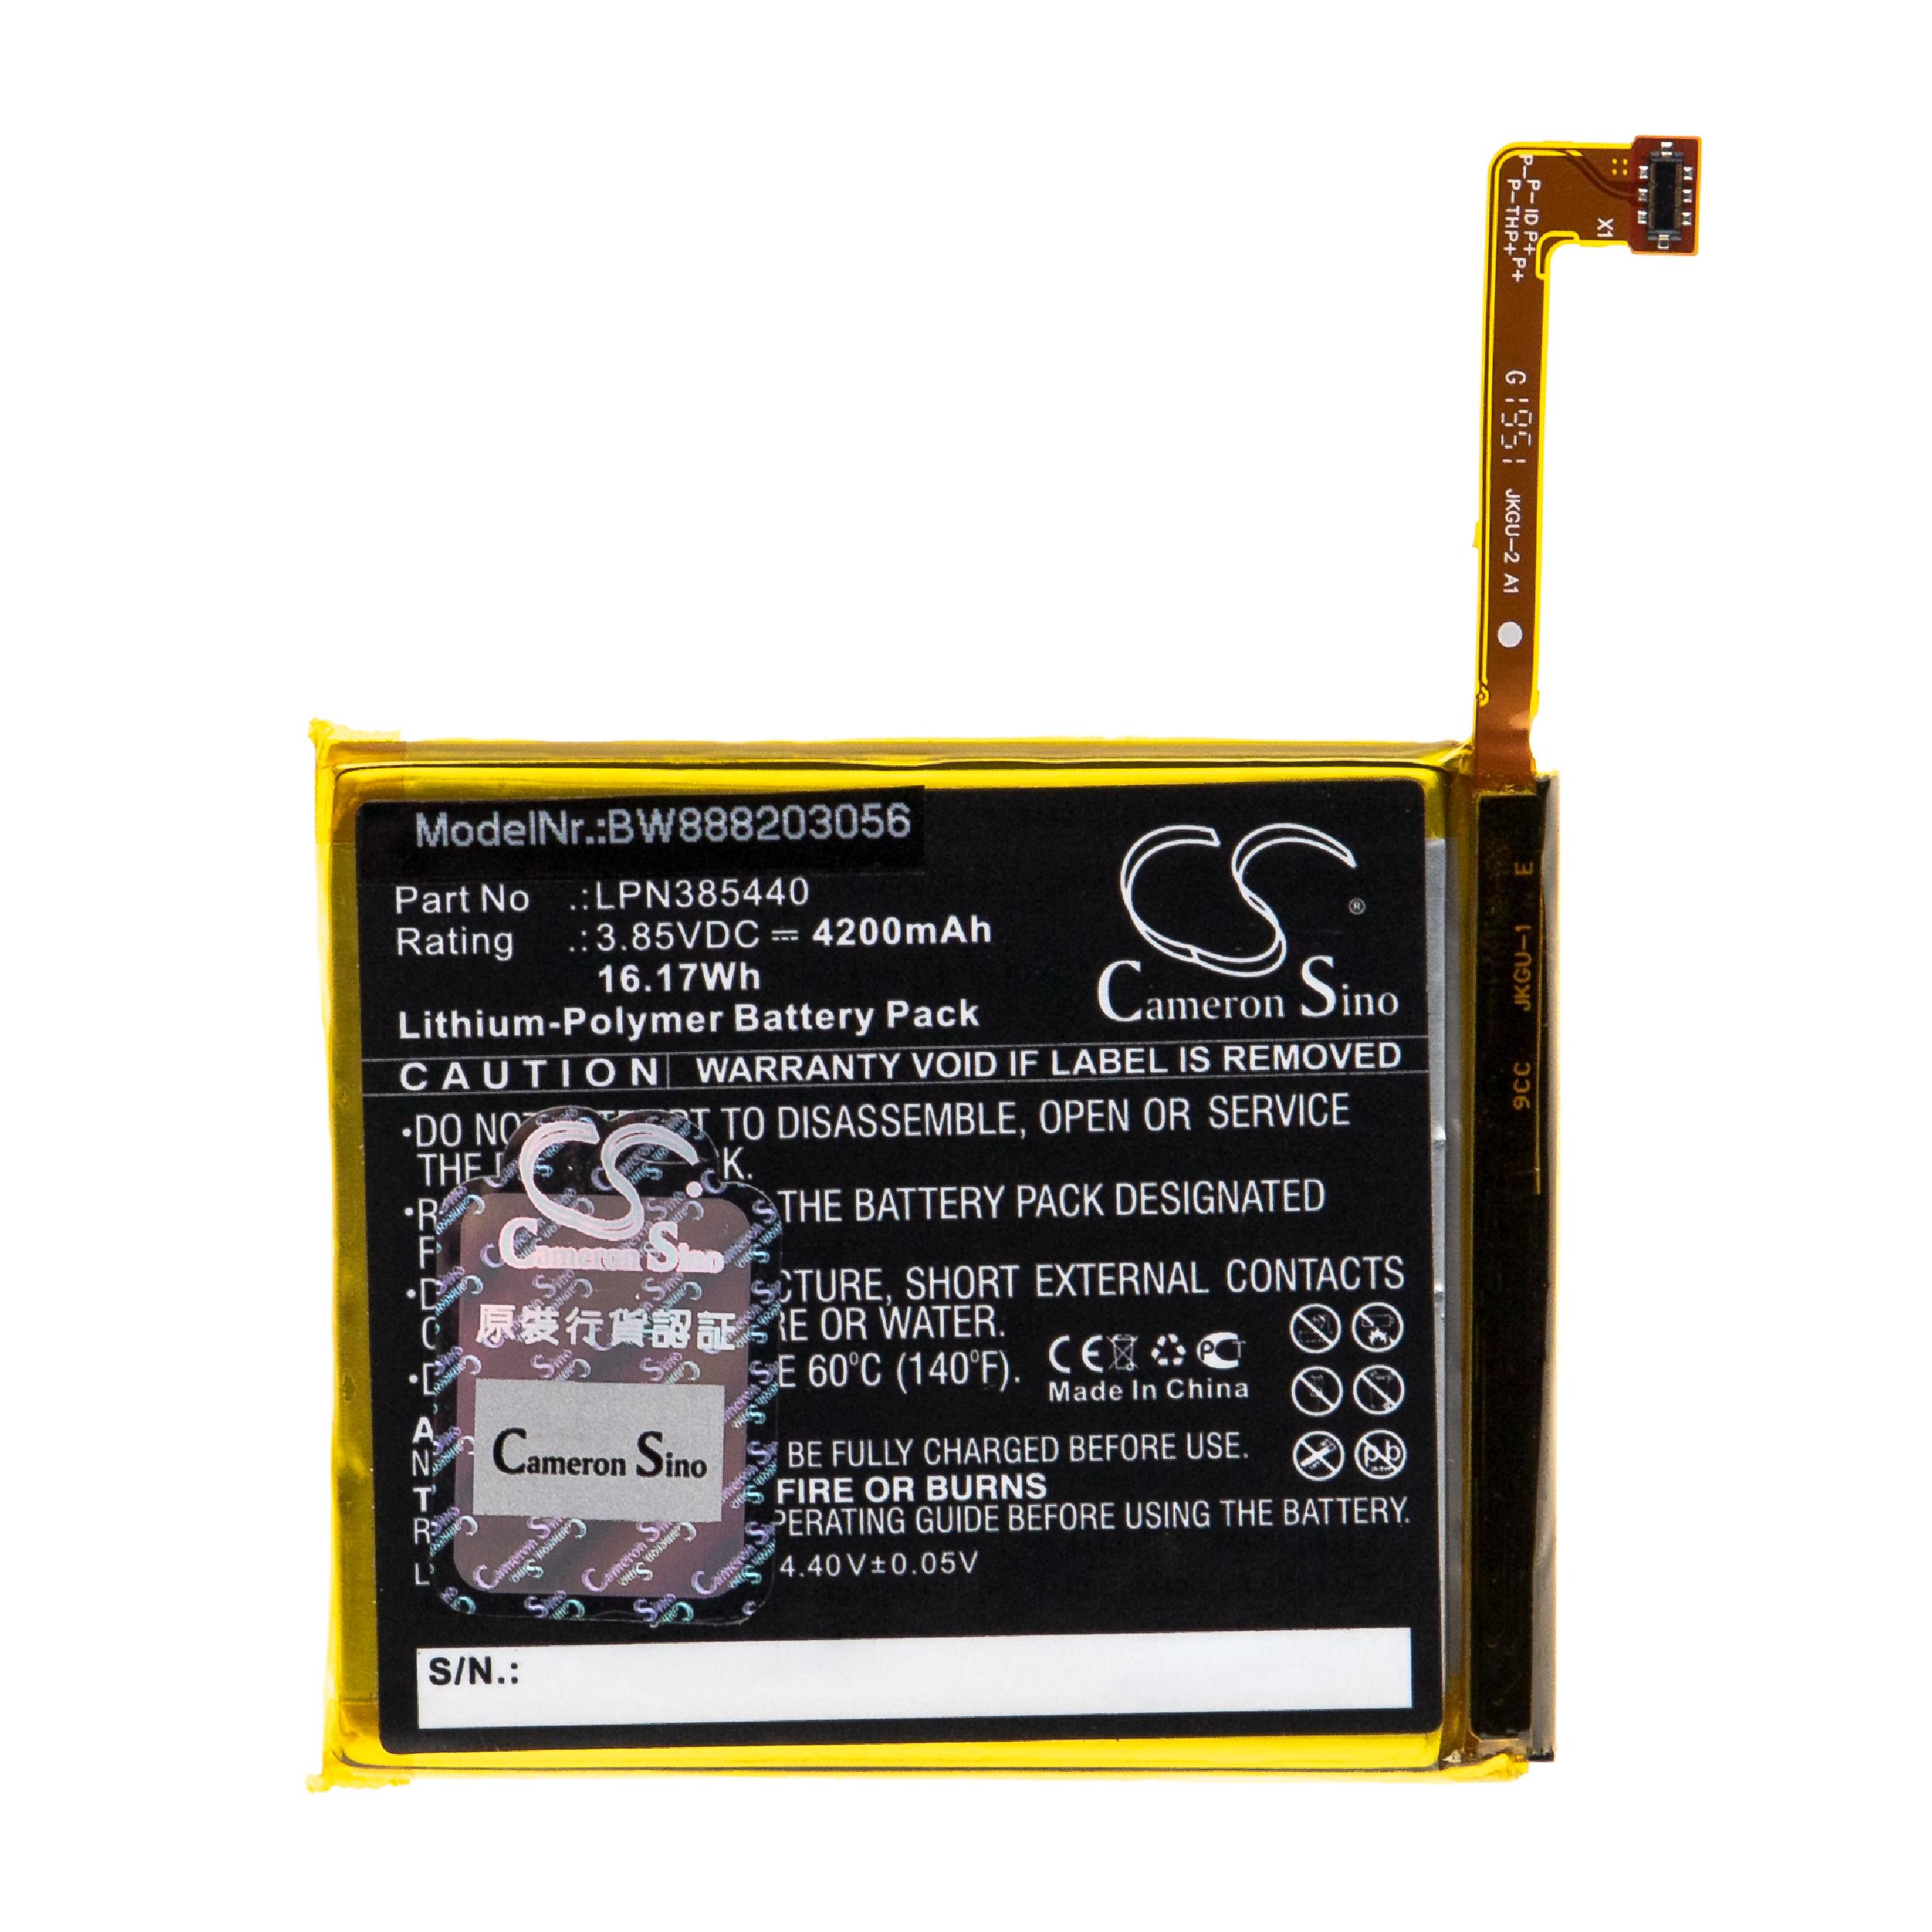 Batteria sostituisce Crosscall LPN385440 per cellulare Crosscall - 4200mAh 3,85V Li-Poly